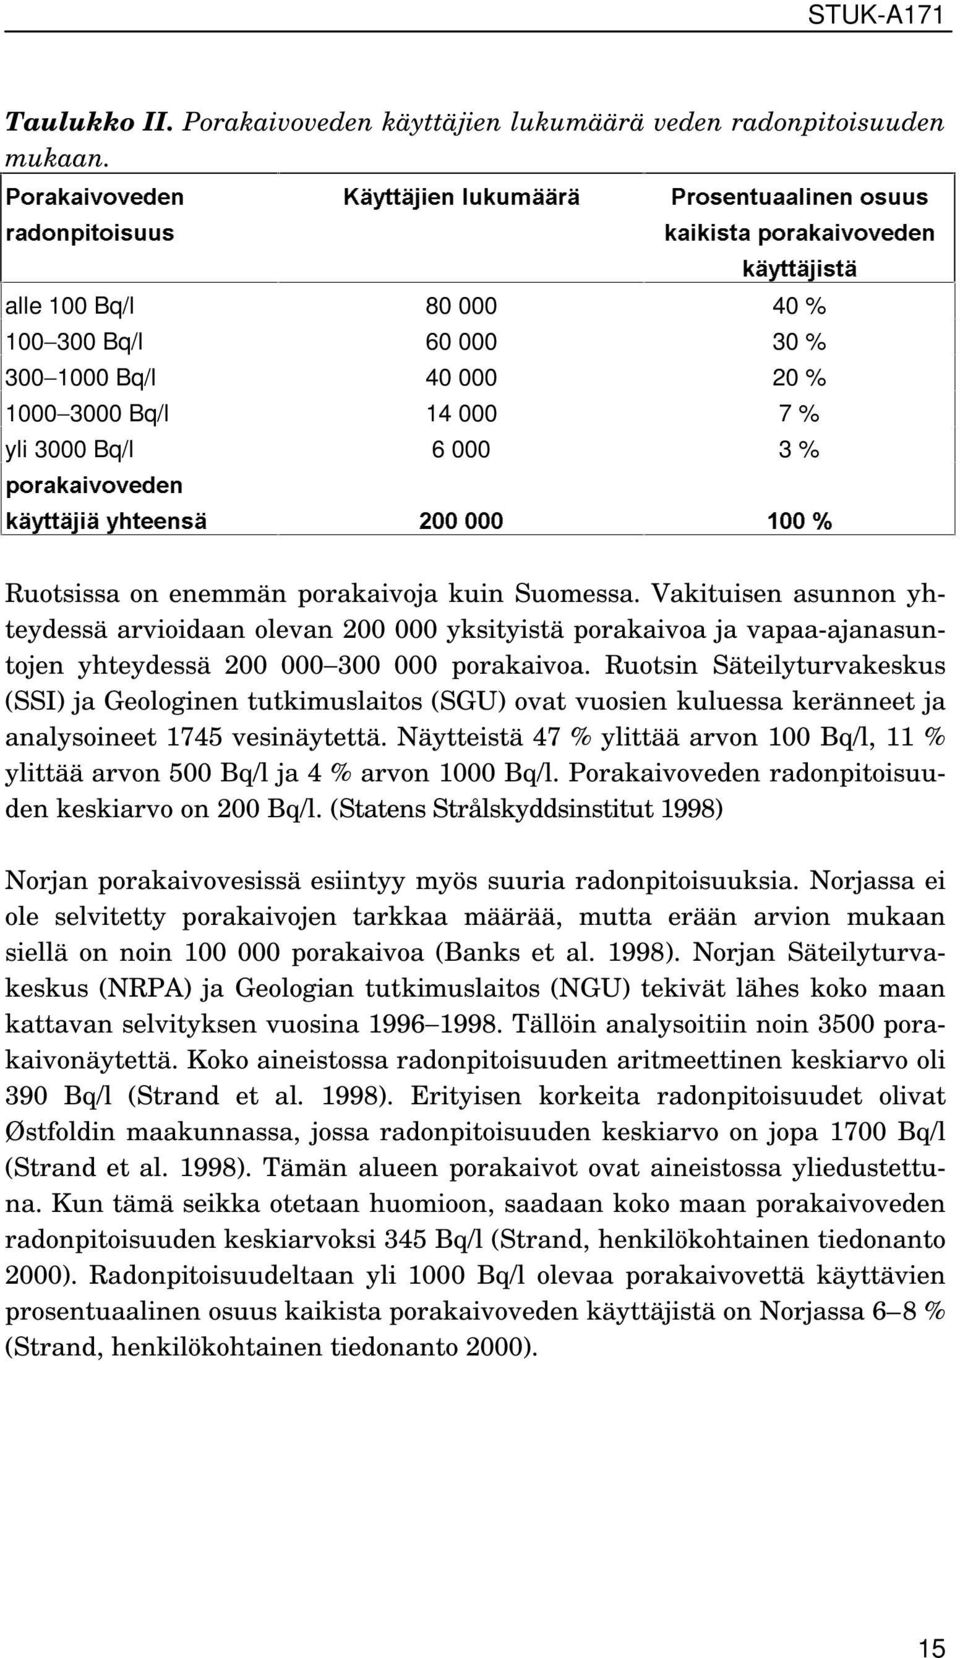 Nl\WWlMLlÃ\KWHHQVl Ã ÃÈ Ruotsissa on enemmän porakaivoja kuin Suomessa.